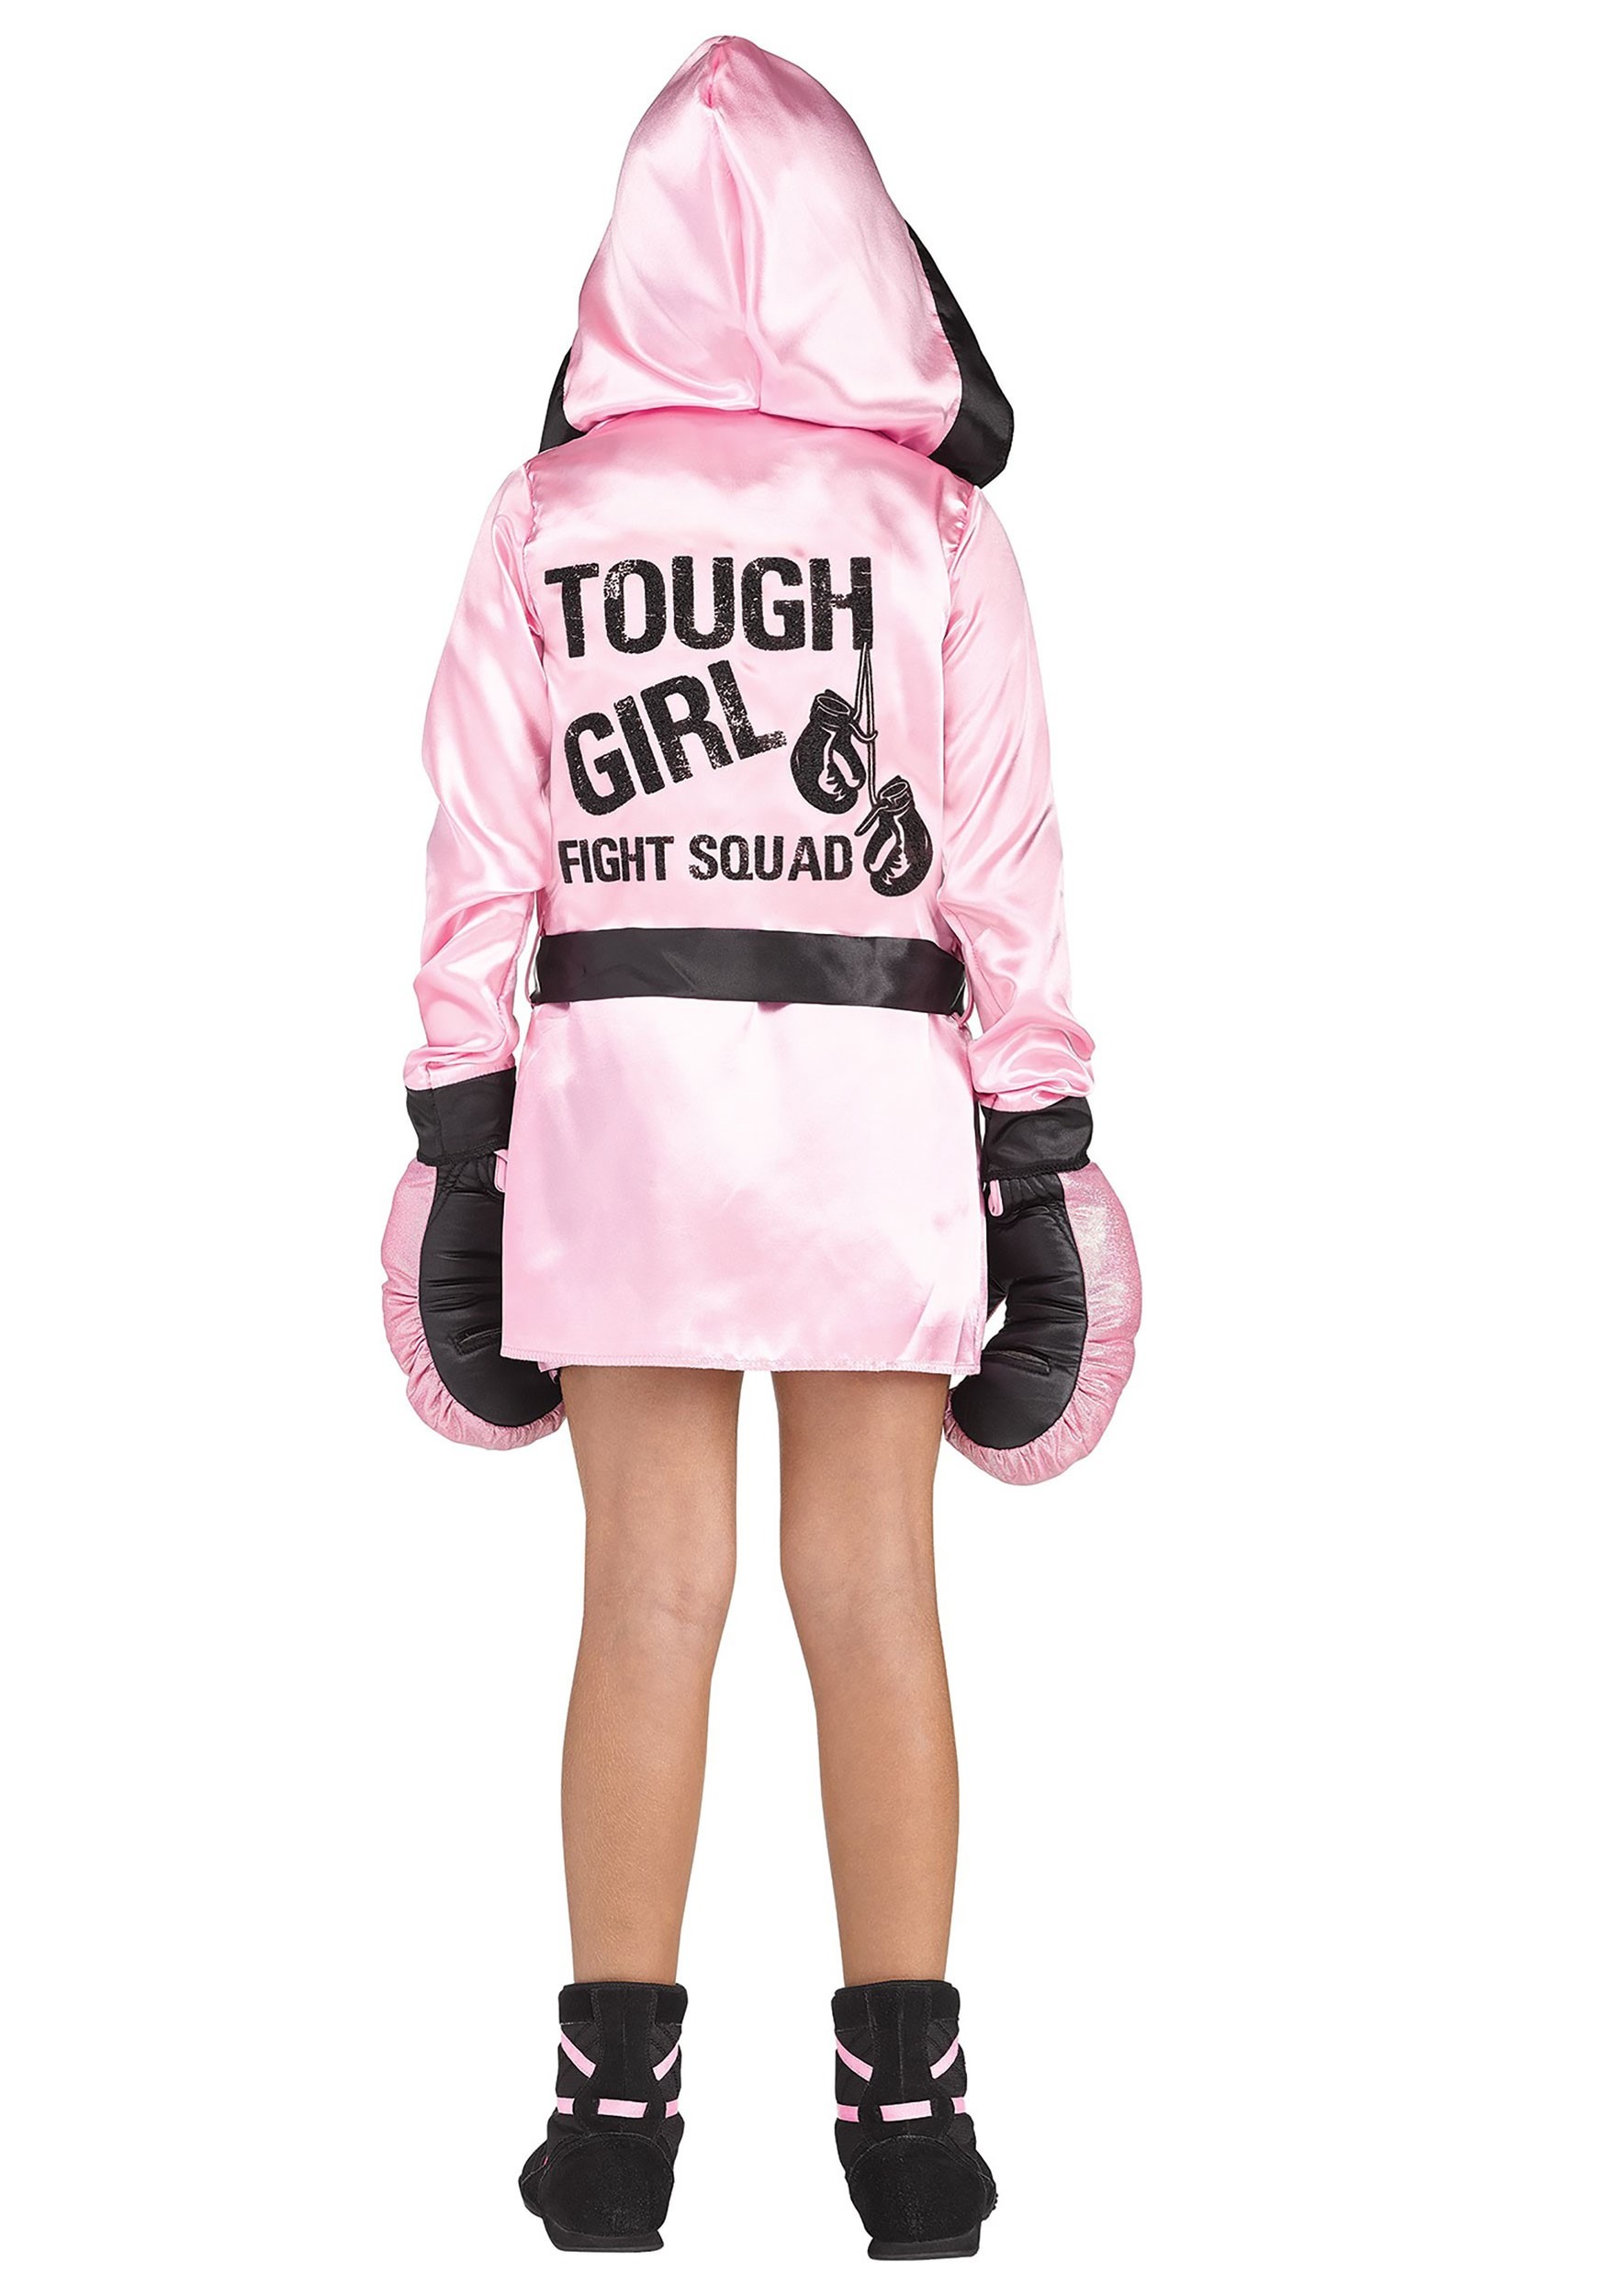 Tough Boxer Girl's Costume
 Homemade Female Boxer Costume